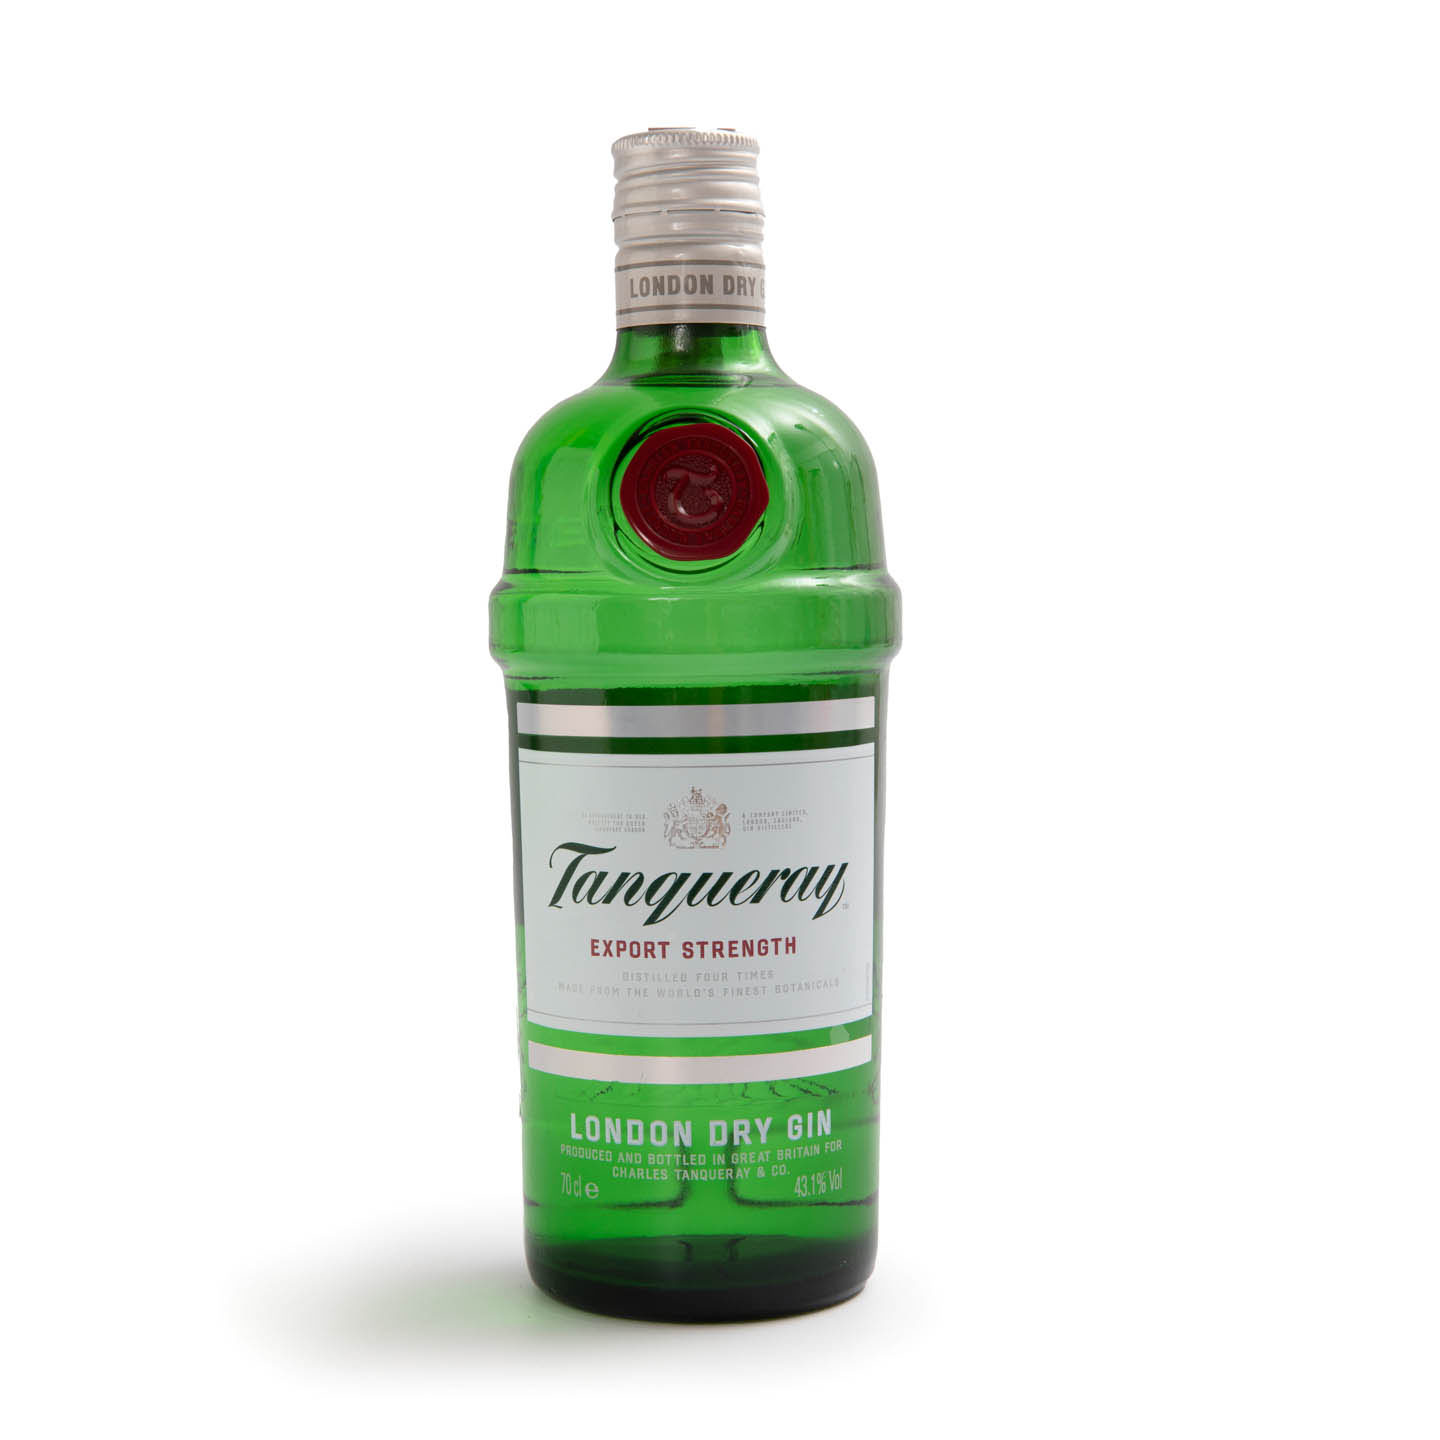 Gin Tanqueray 0.7L